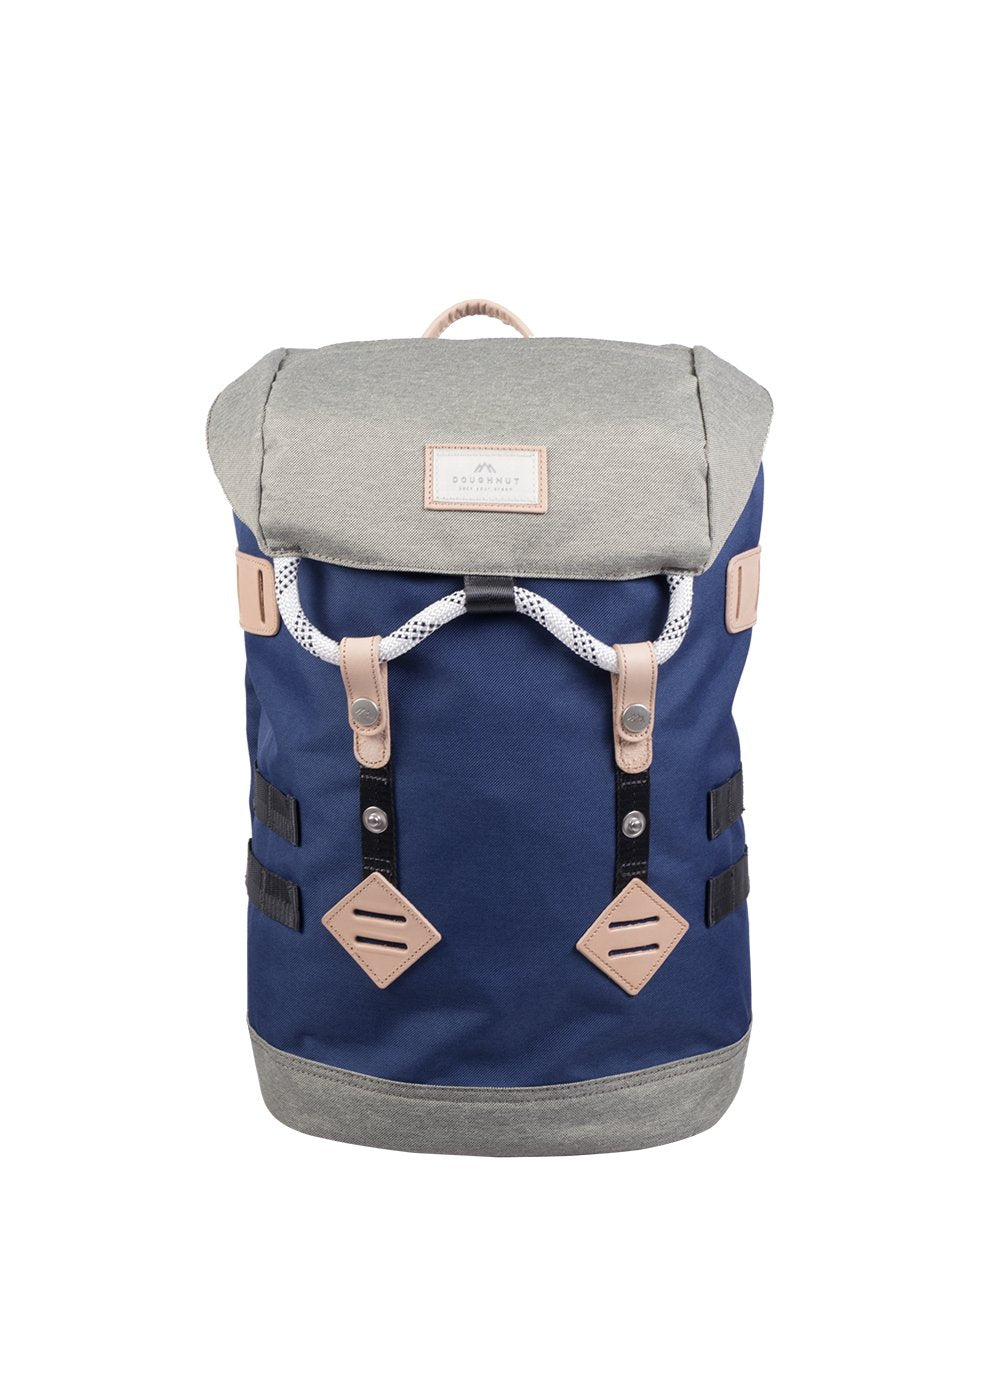 Colorado Small Backpack